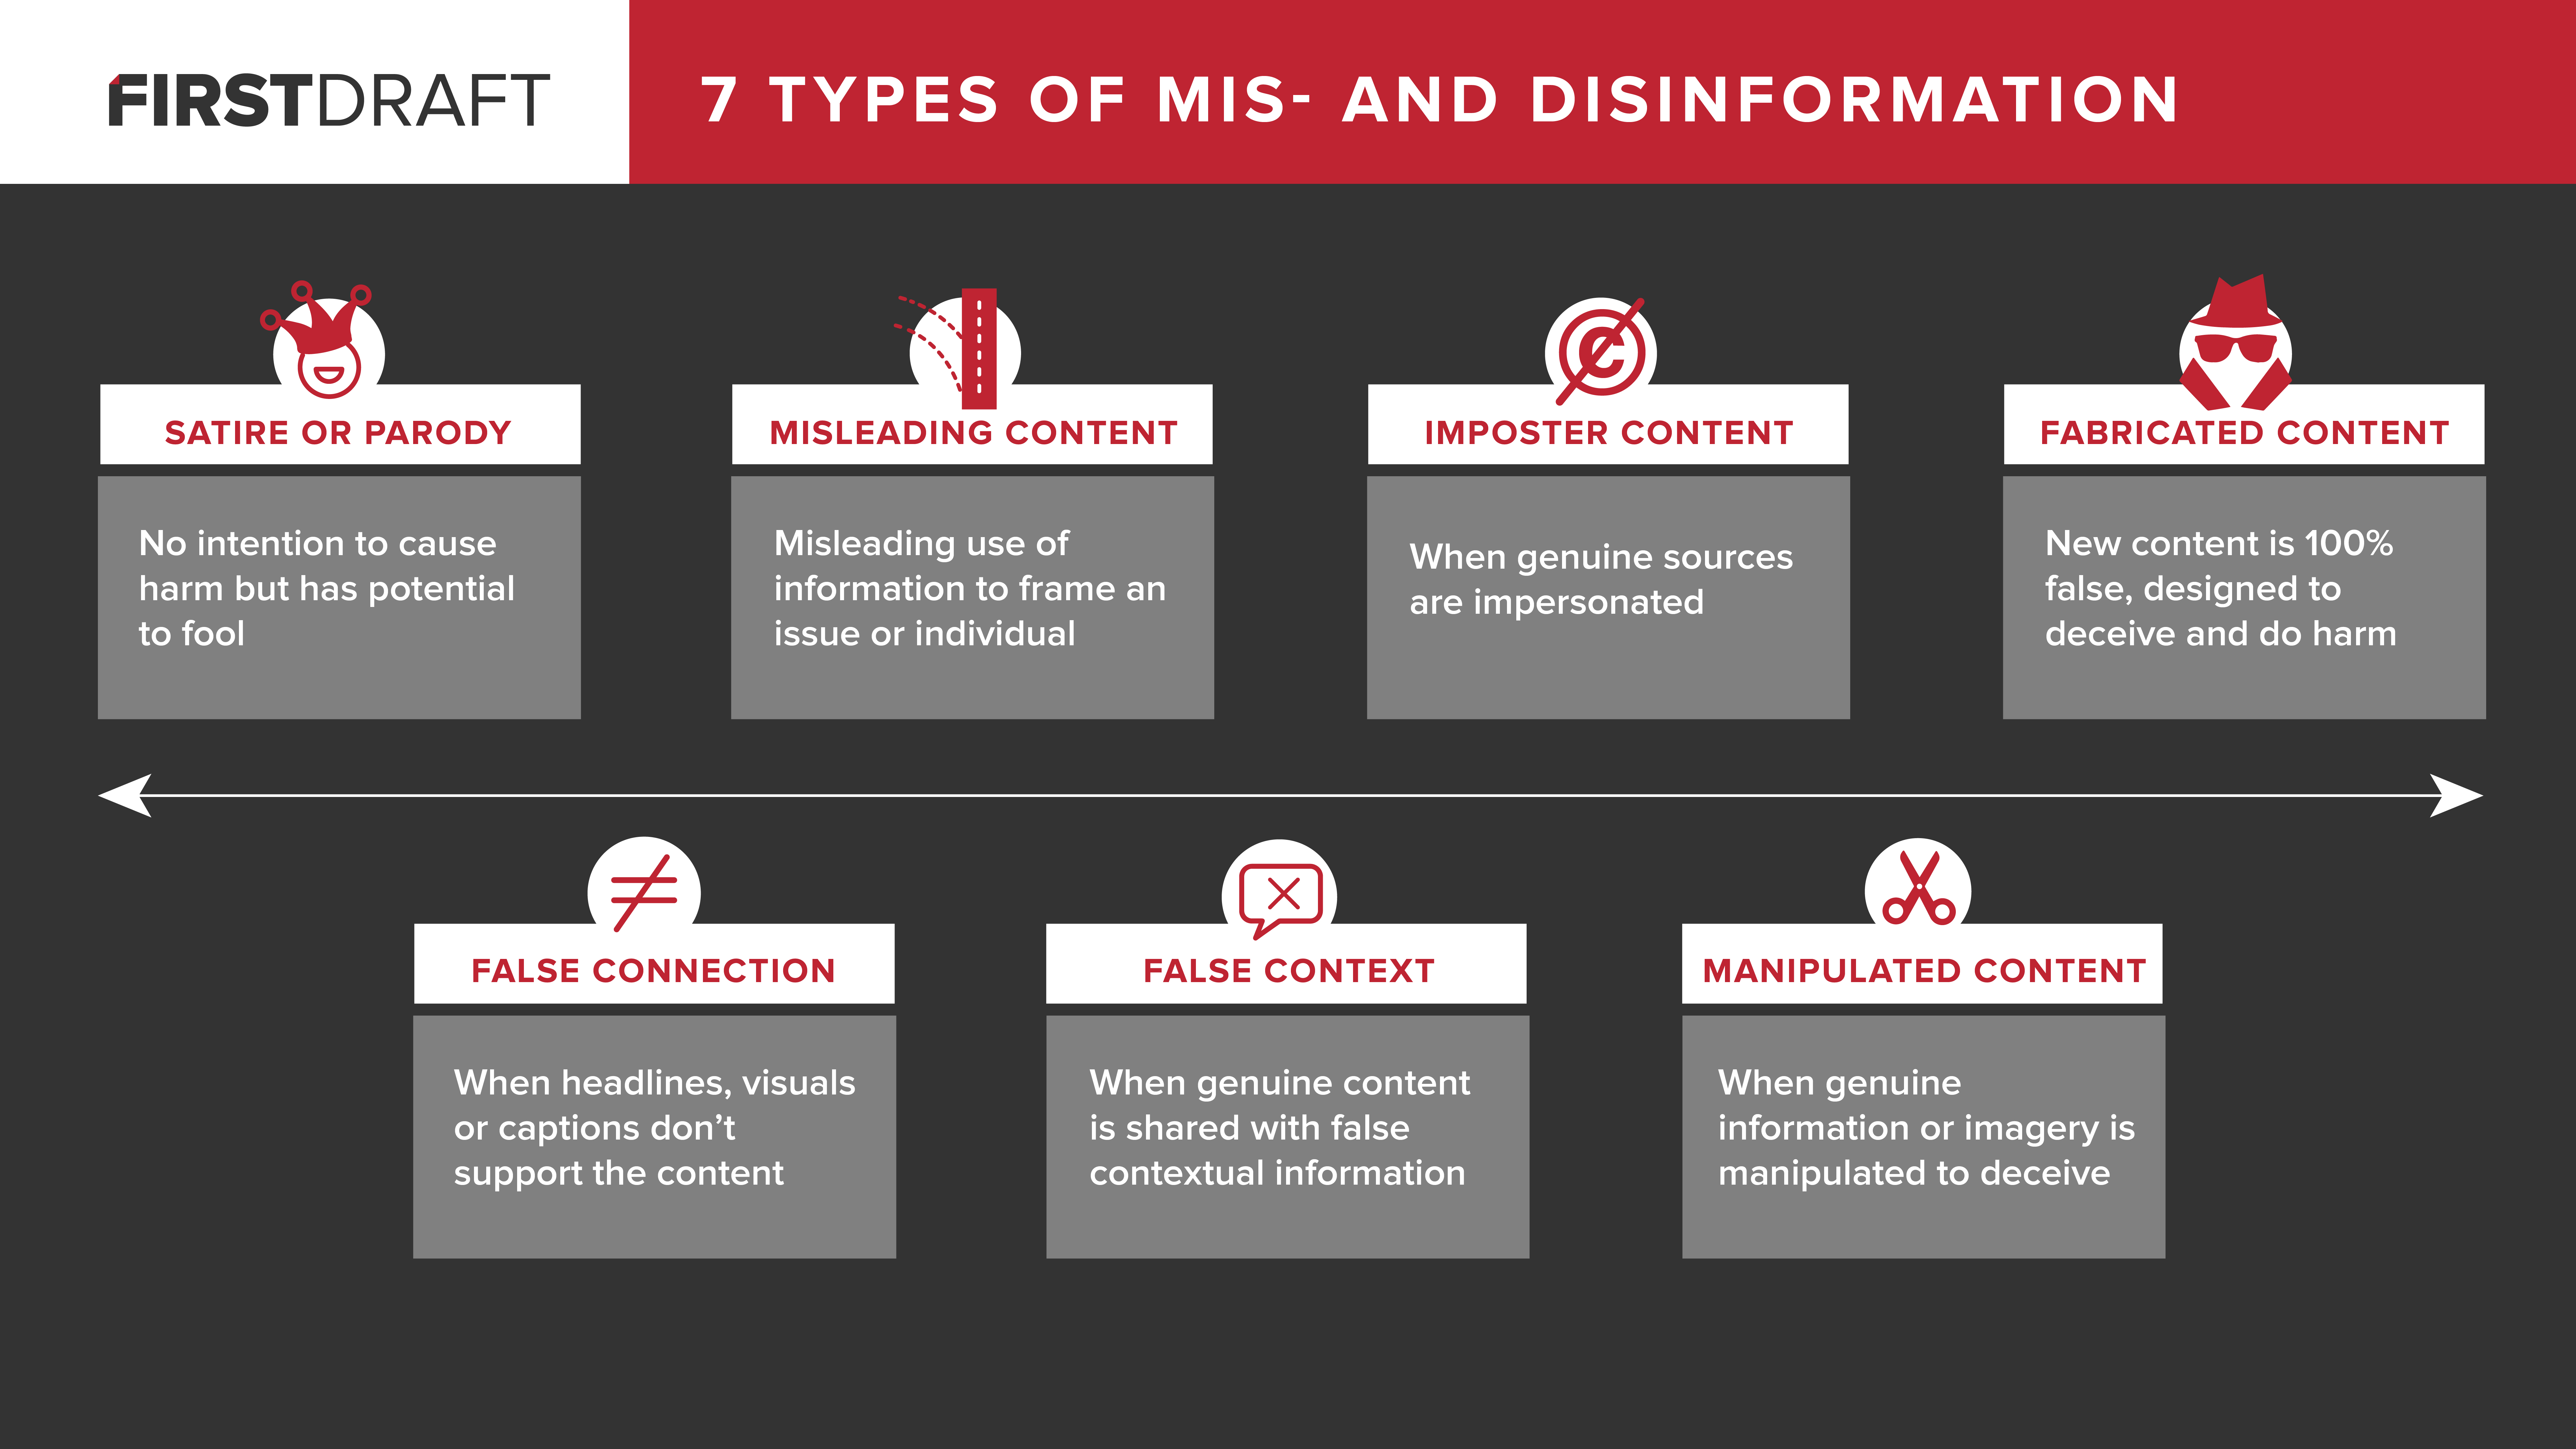 7 types of mis/disinformation